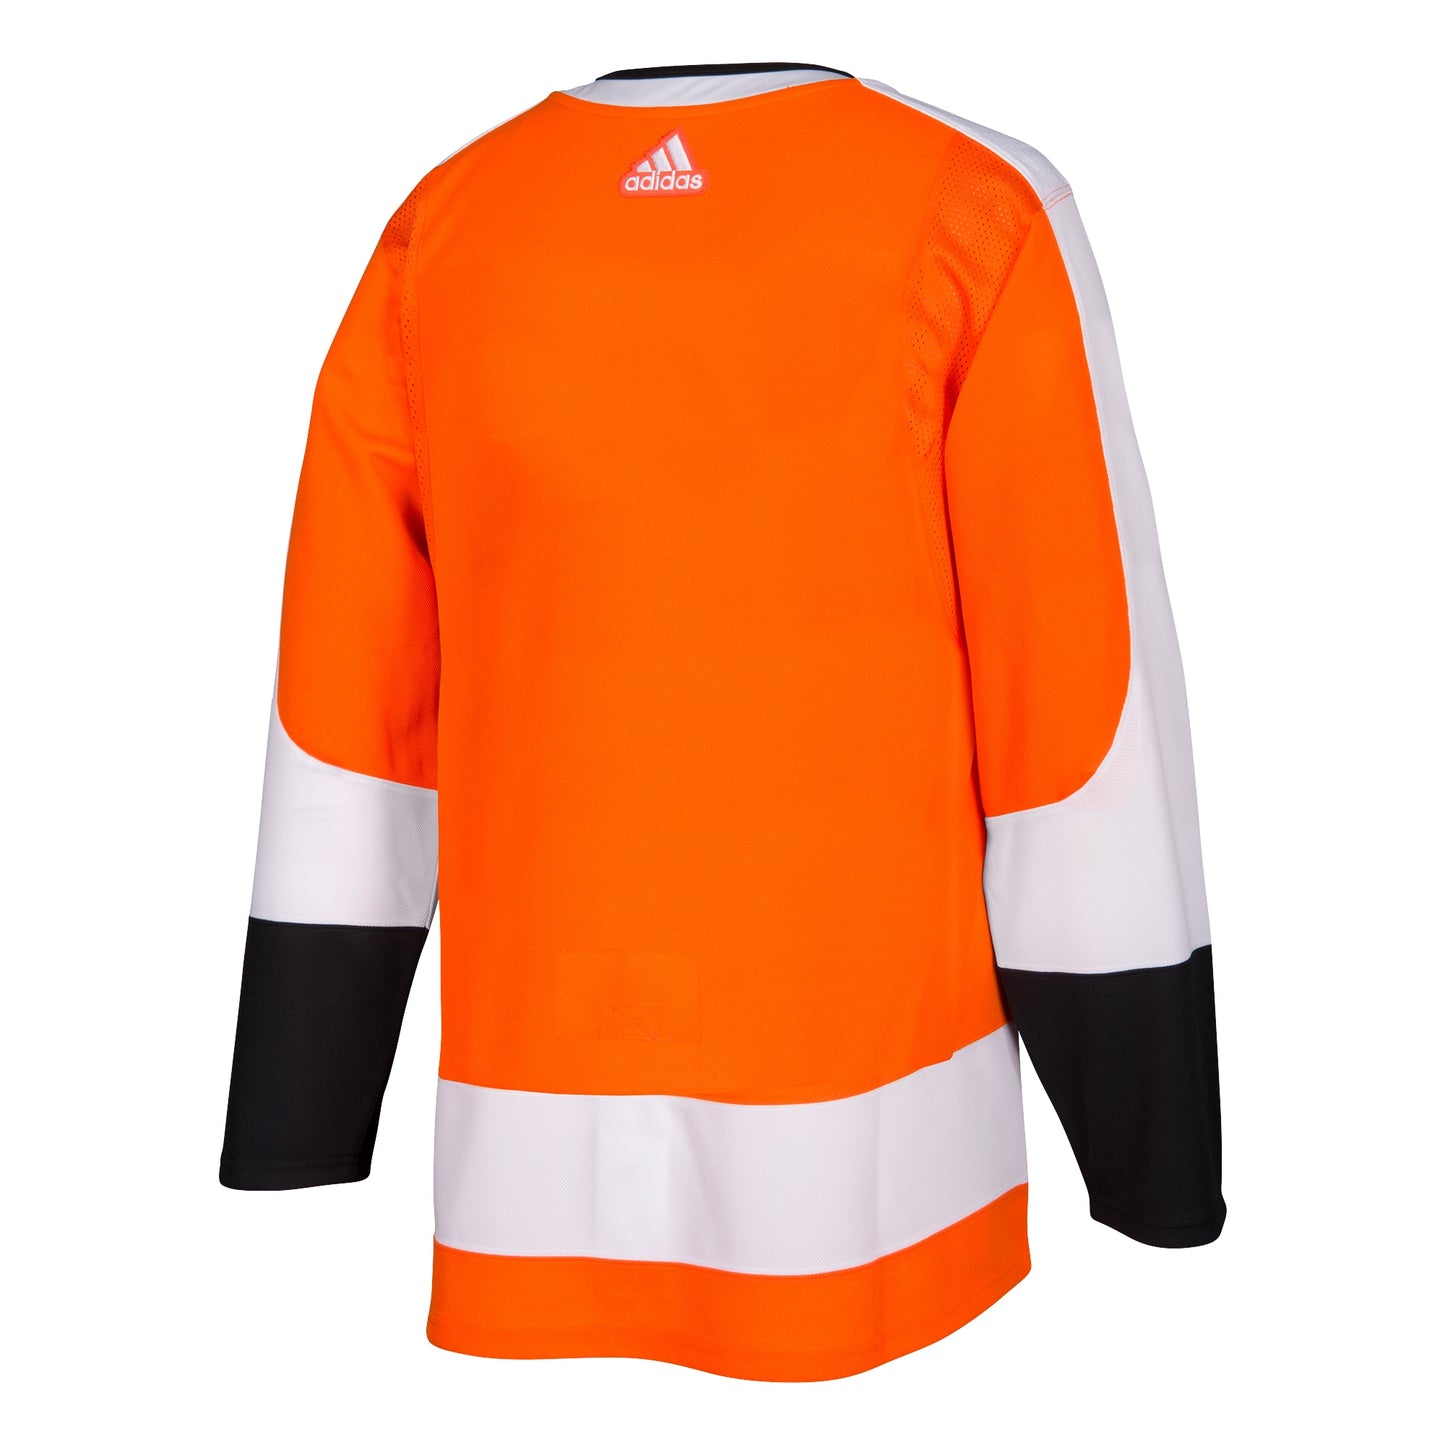 Philadelphia Flyers adidas Home Authentic Blank Jersey - Orange